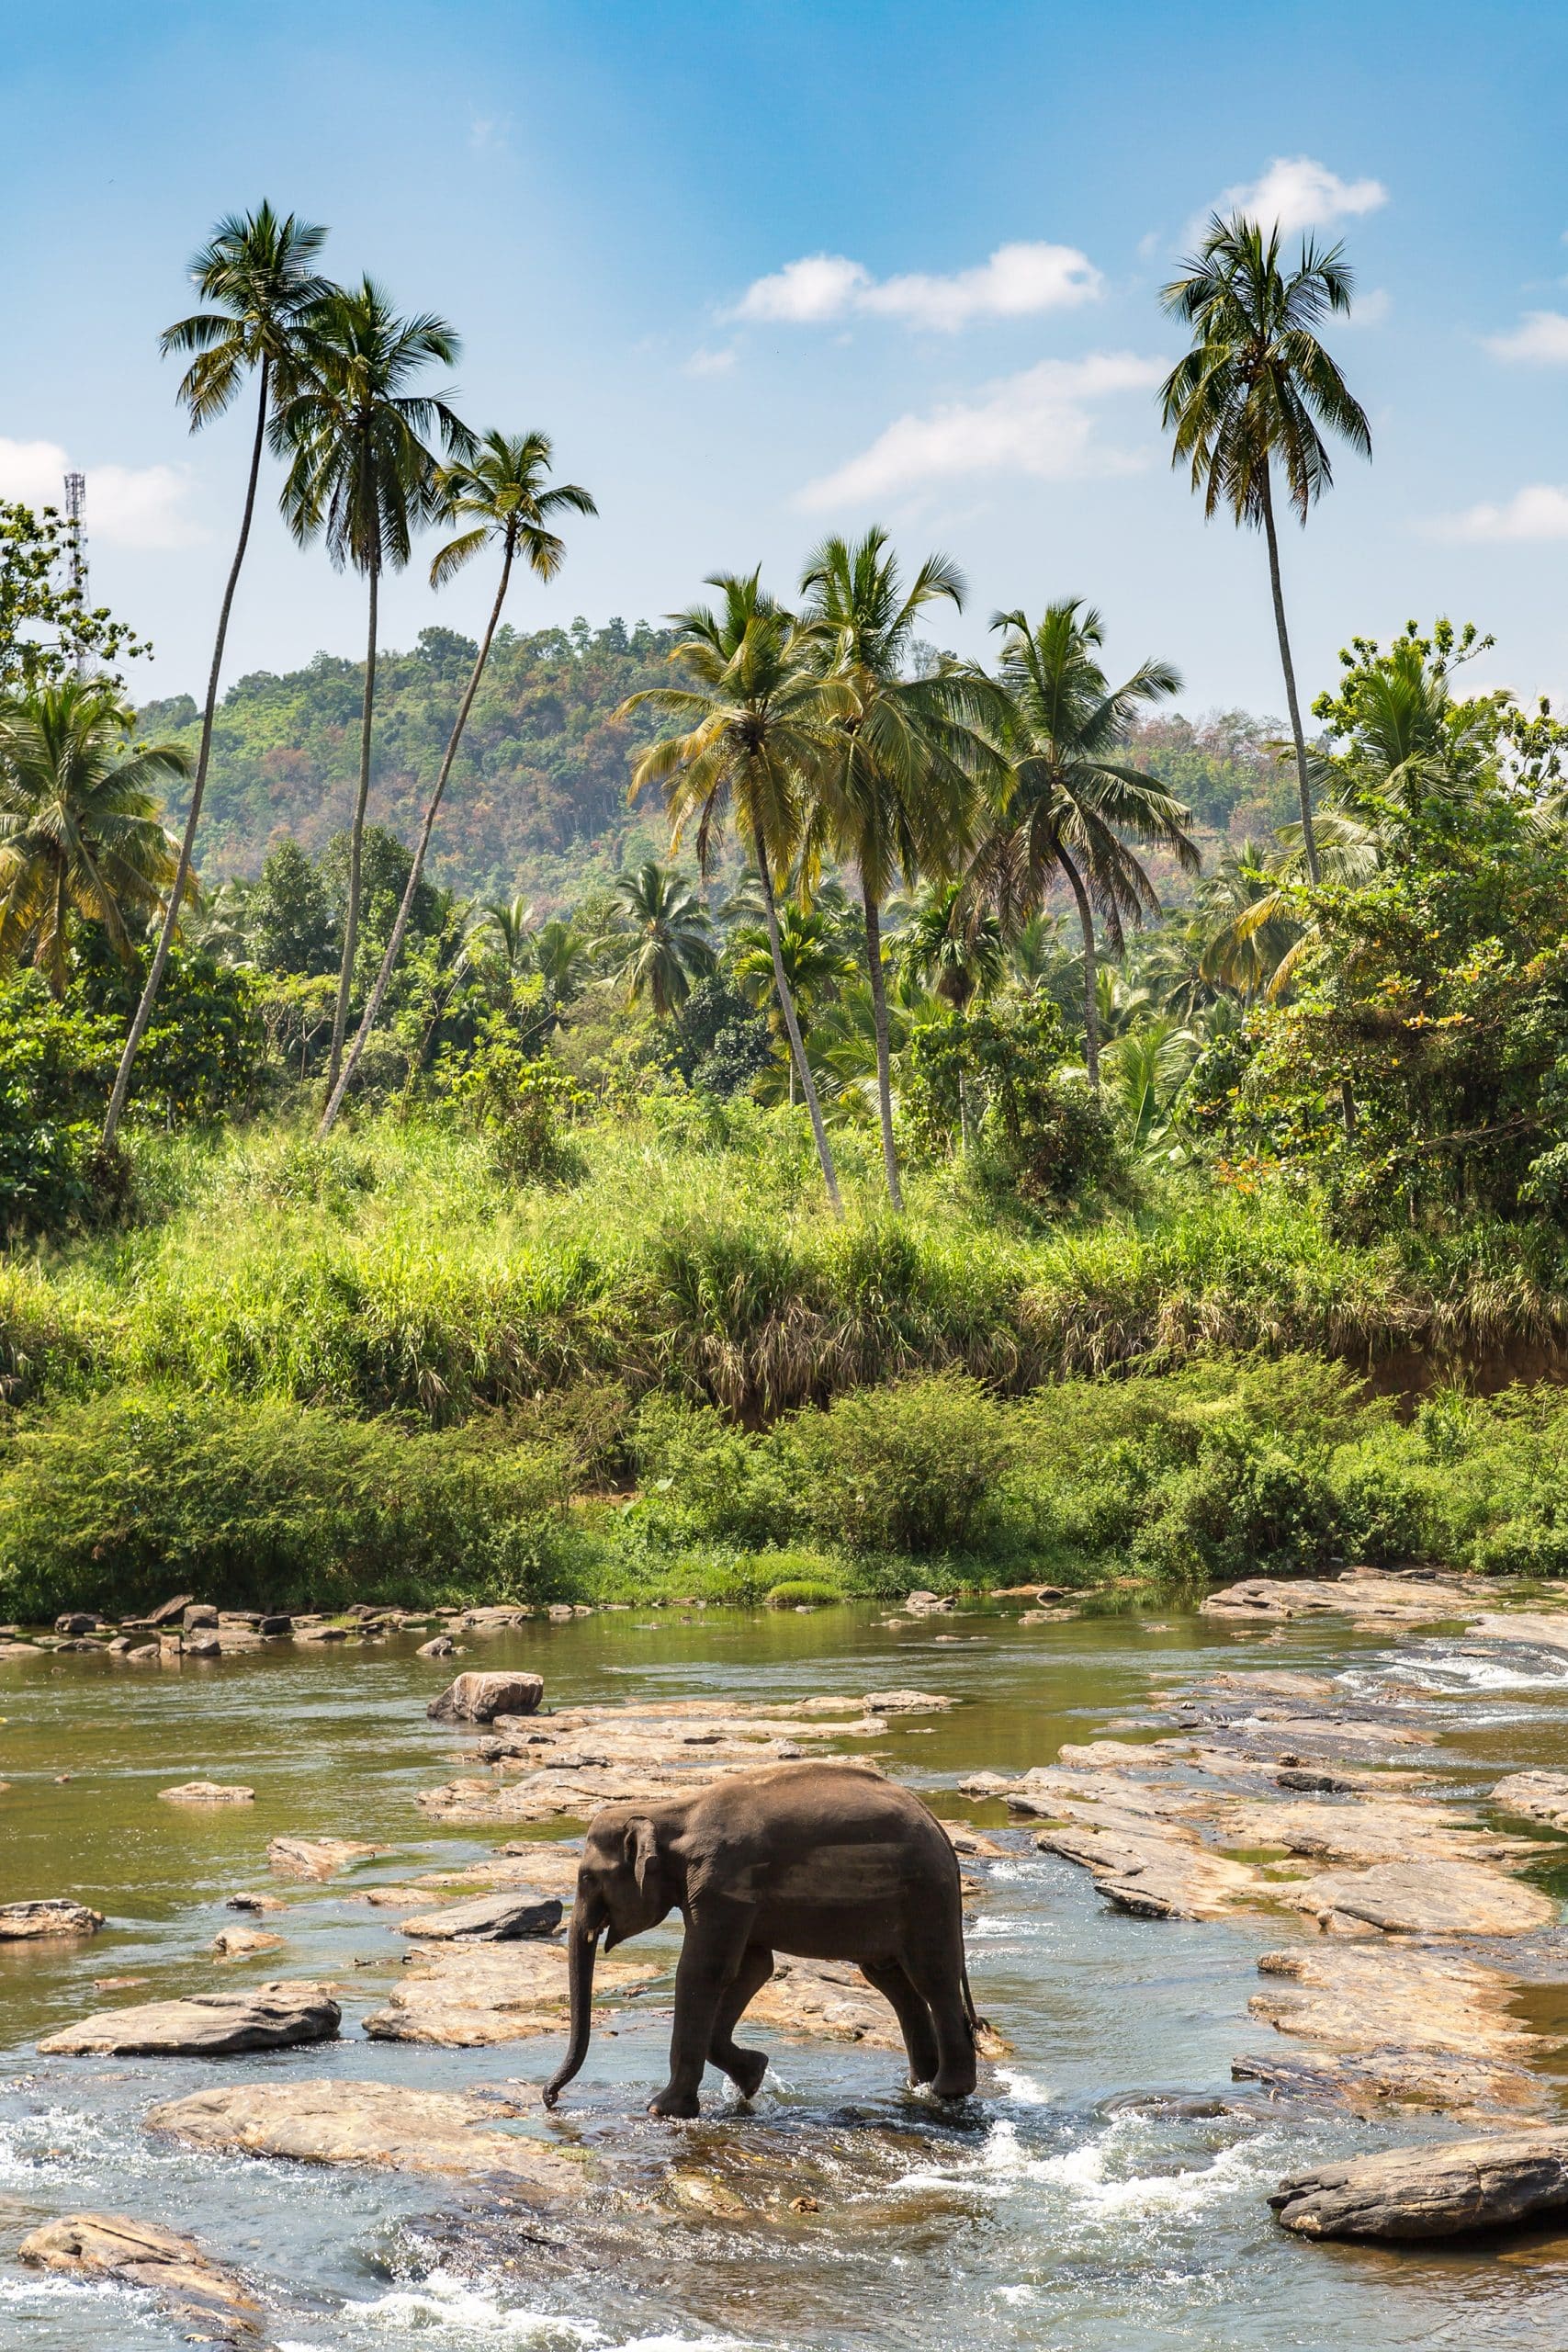 Single,Elephant,At,The,River,In,Sri,Lanka